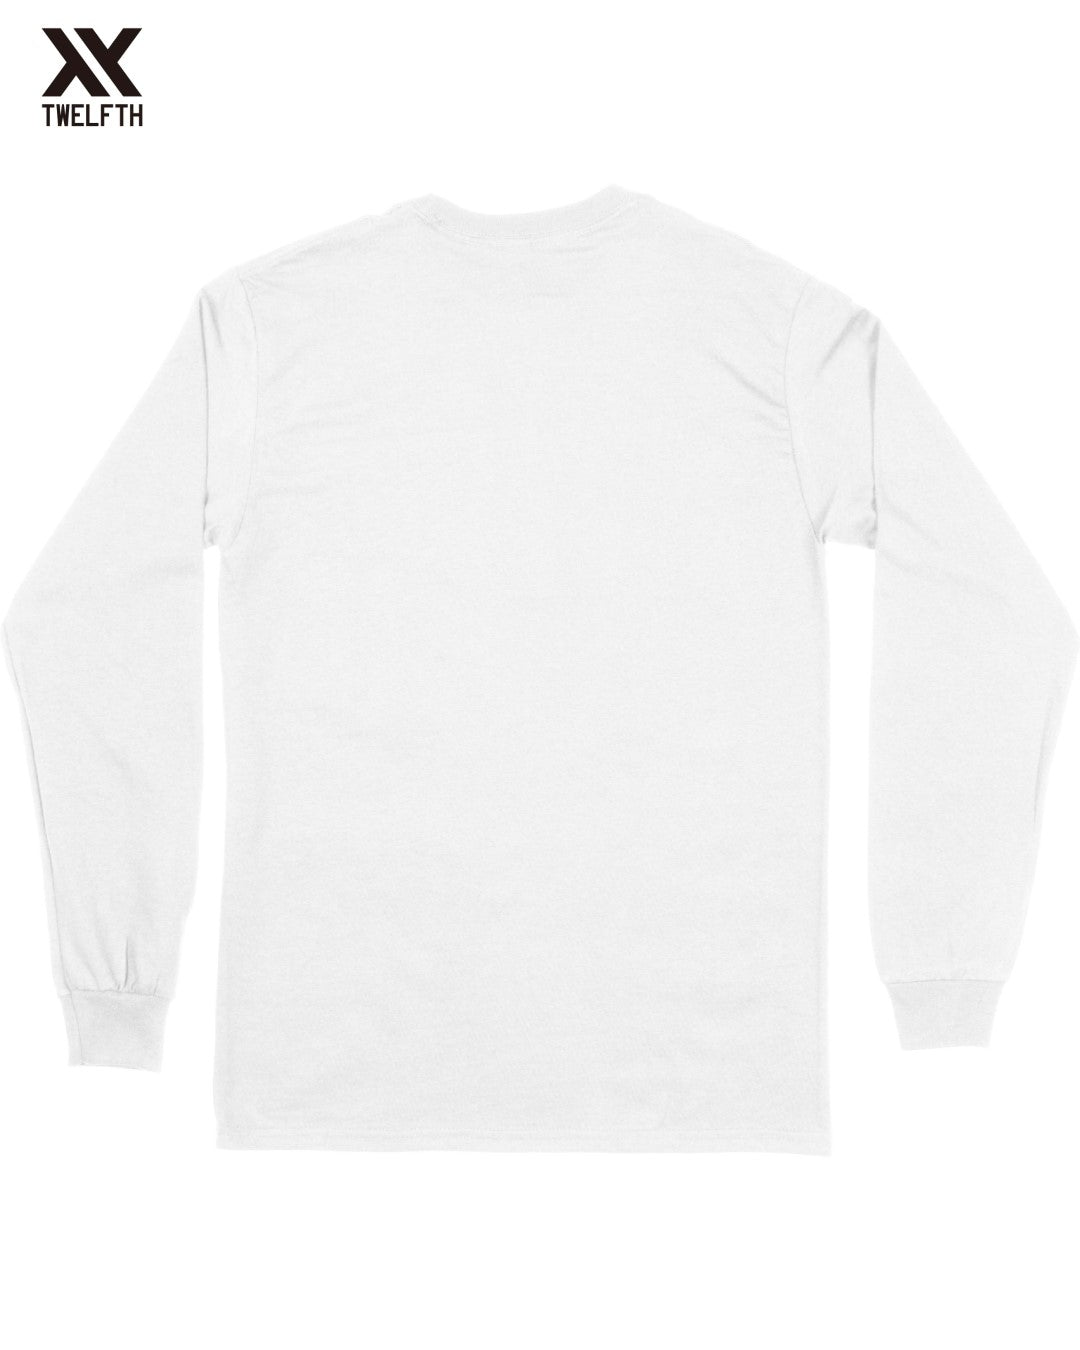 SC Internacional  Crest T-Shirt - Mens - Long Sleeve